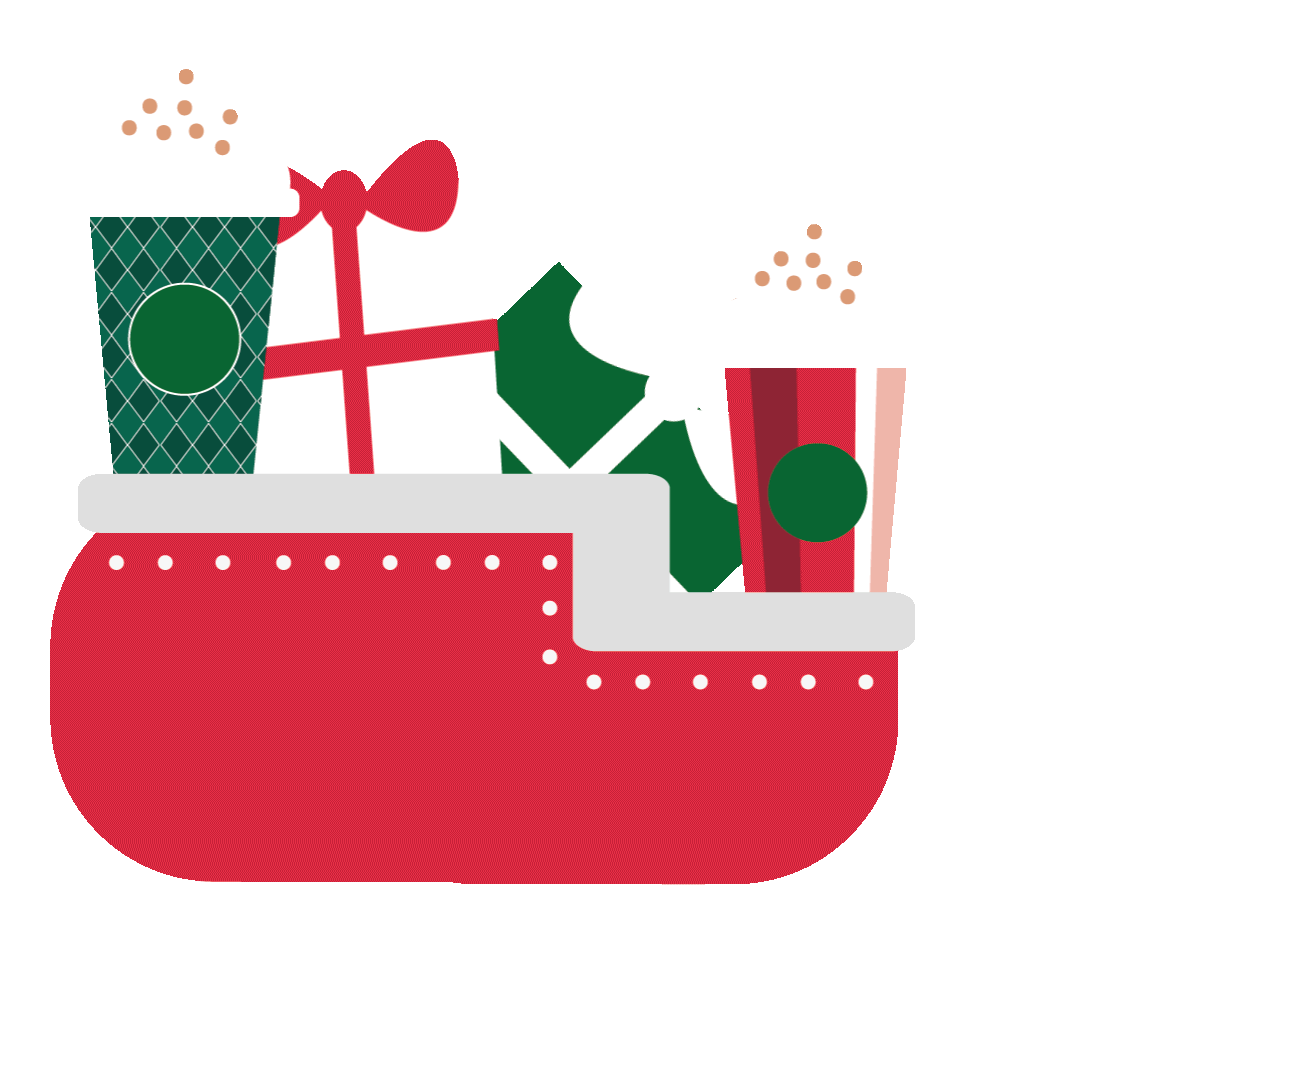 Starbucks lanza una serie de gifs navideños